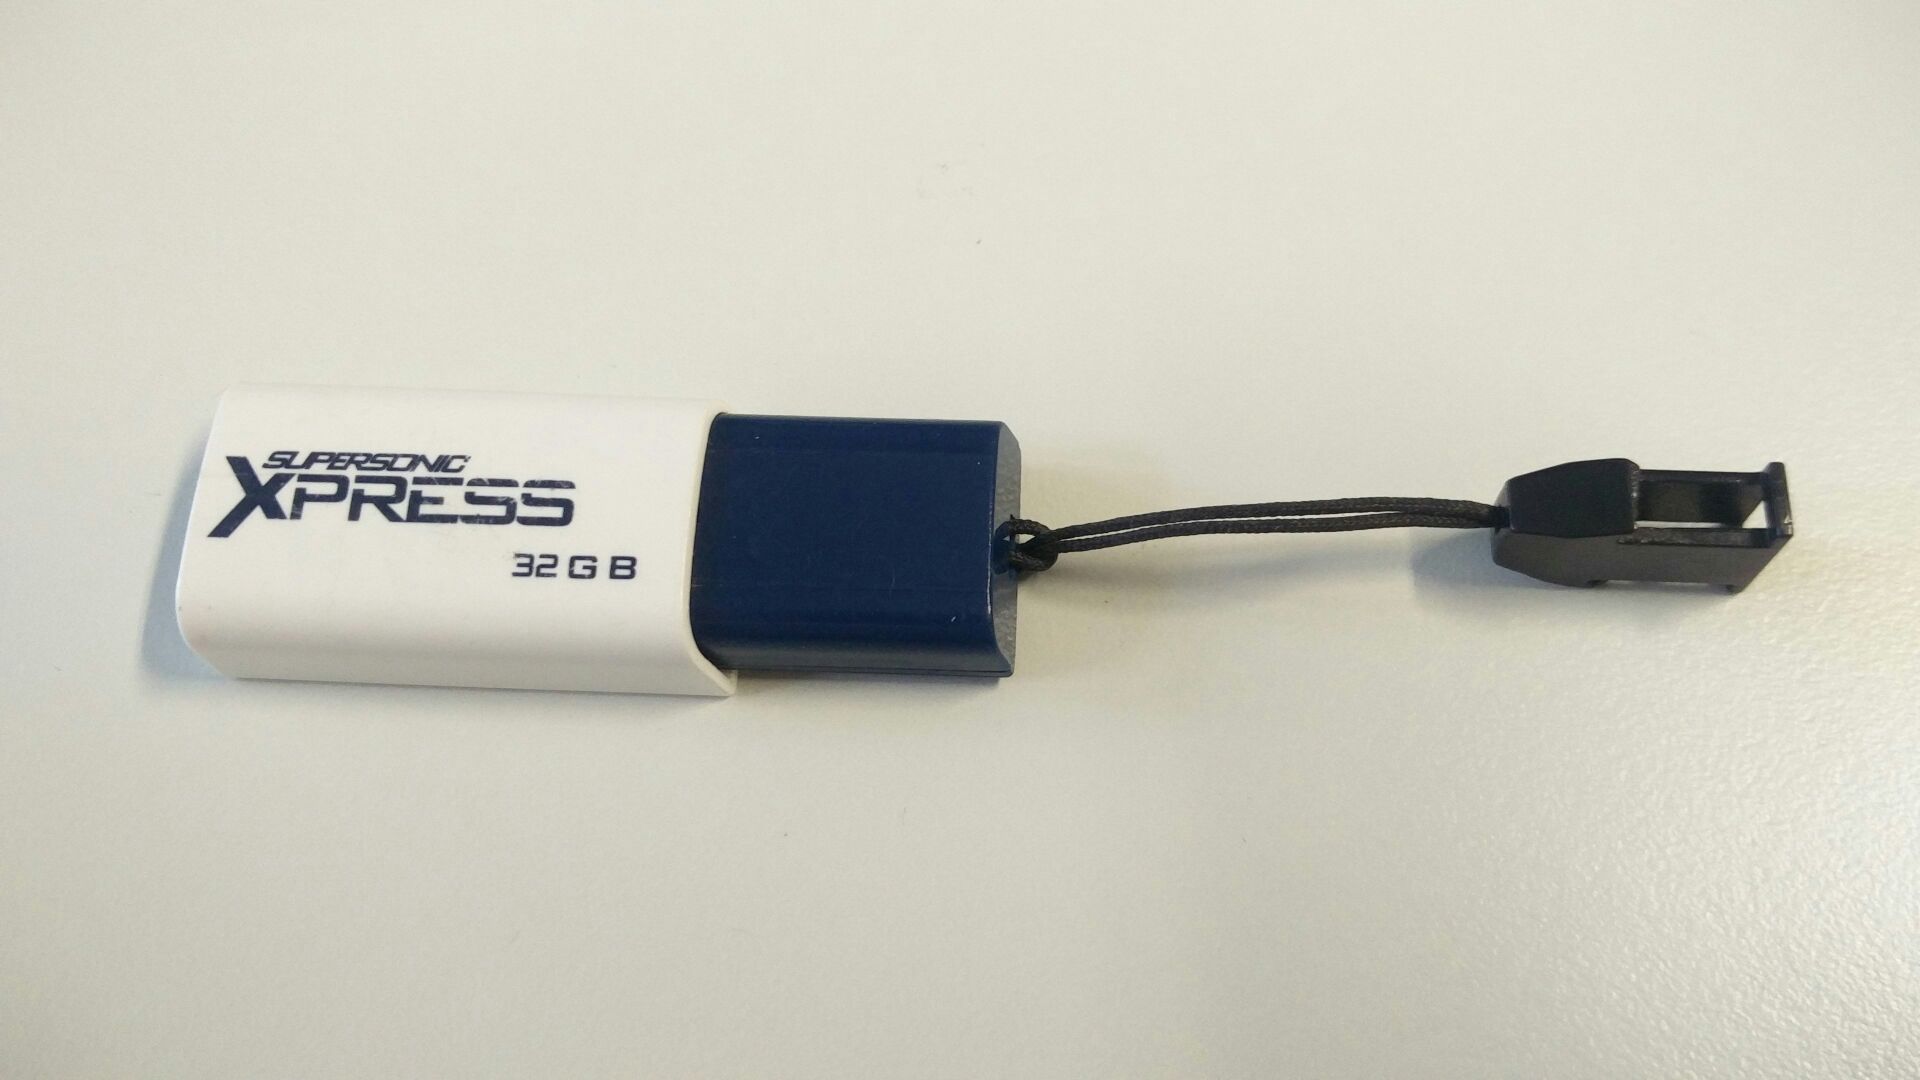 USB stick (white and blue, 32 GB)